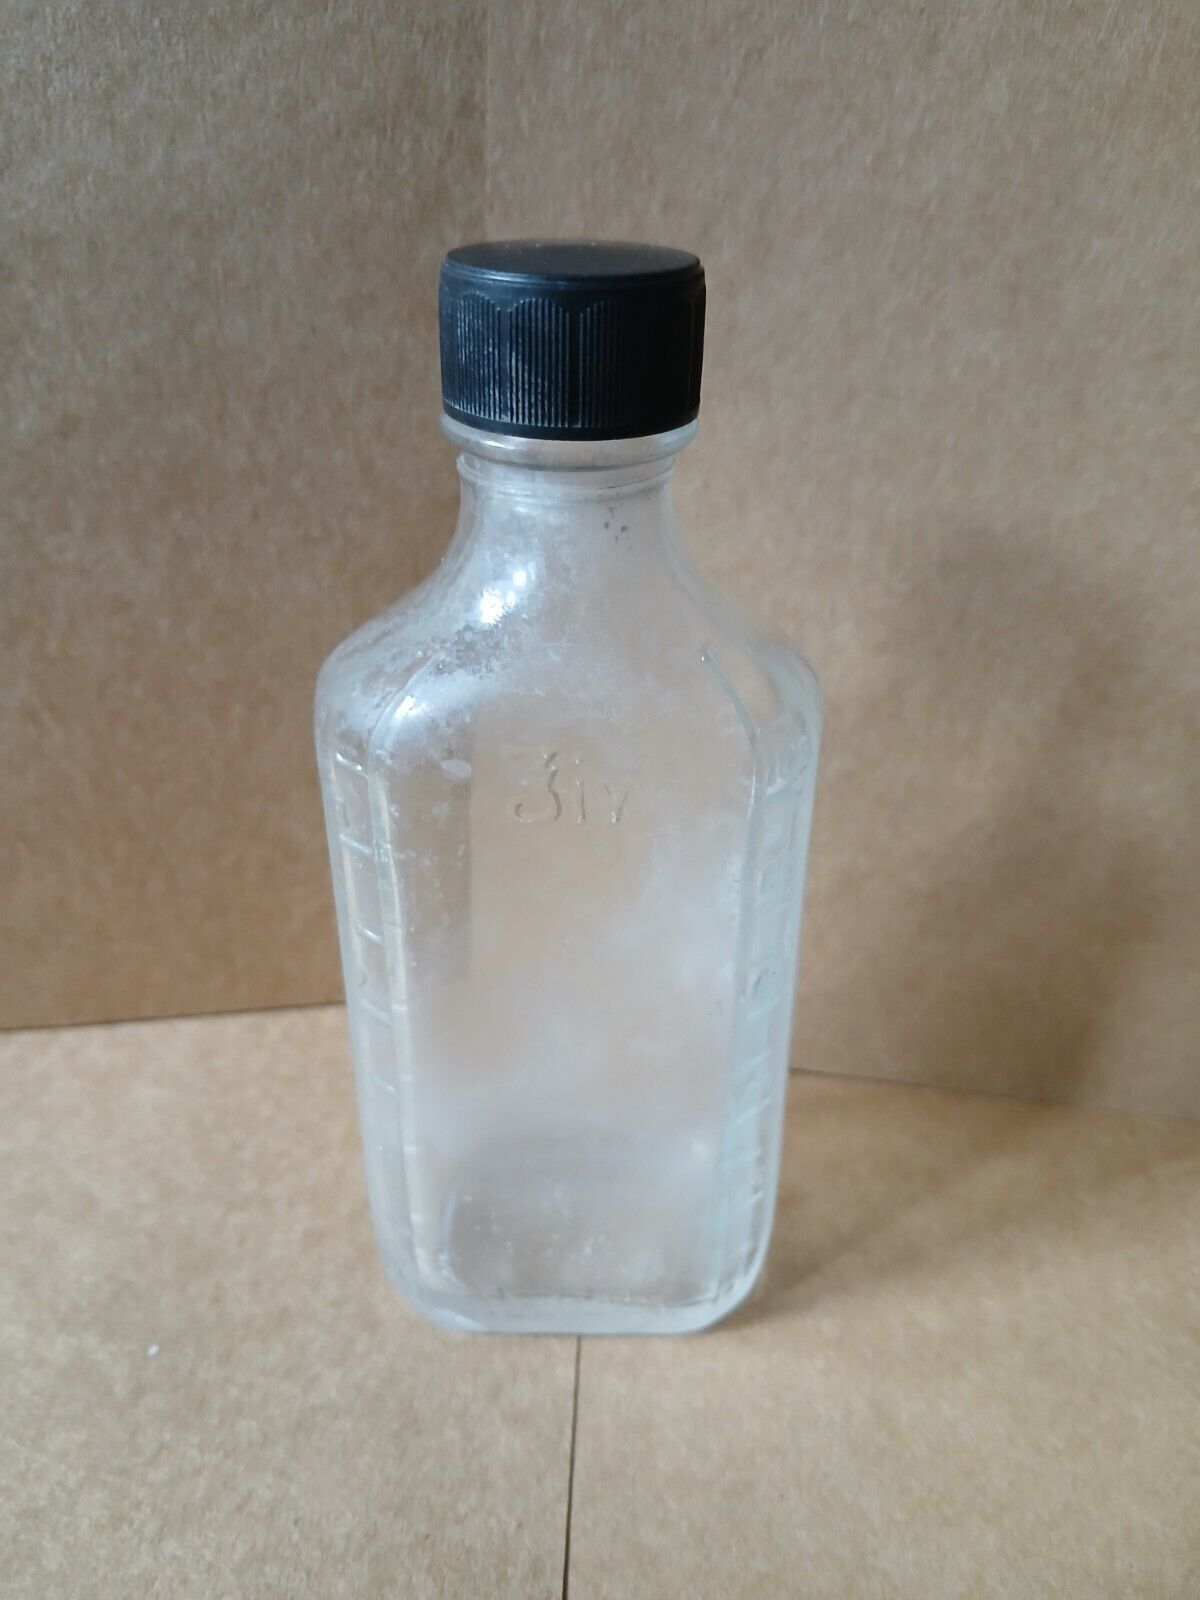 Vintage Duraglass Owen illinois Medicine Bottle (1957) WITH CAP